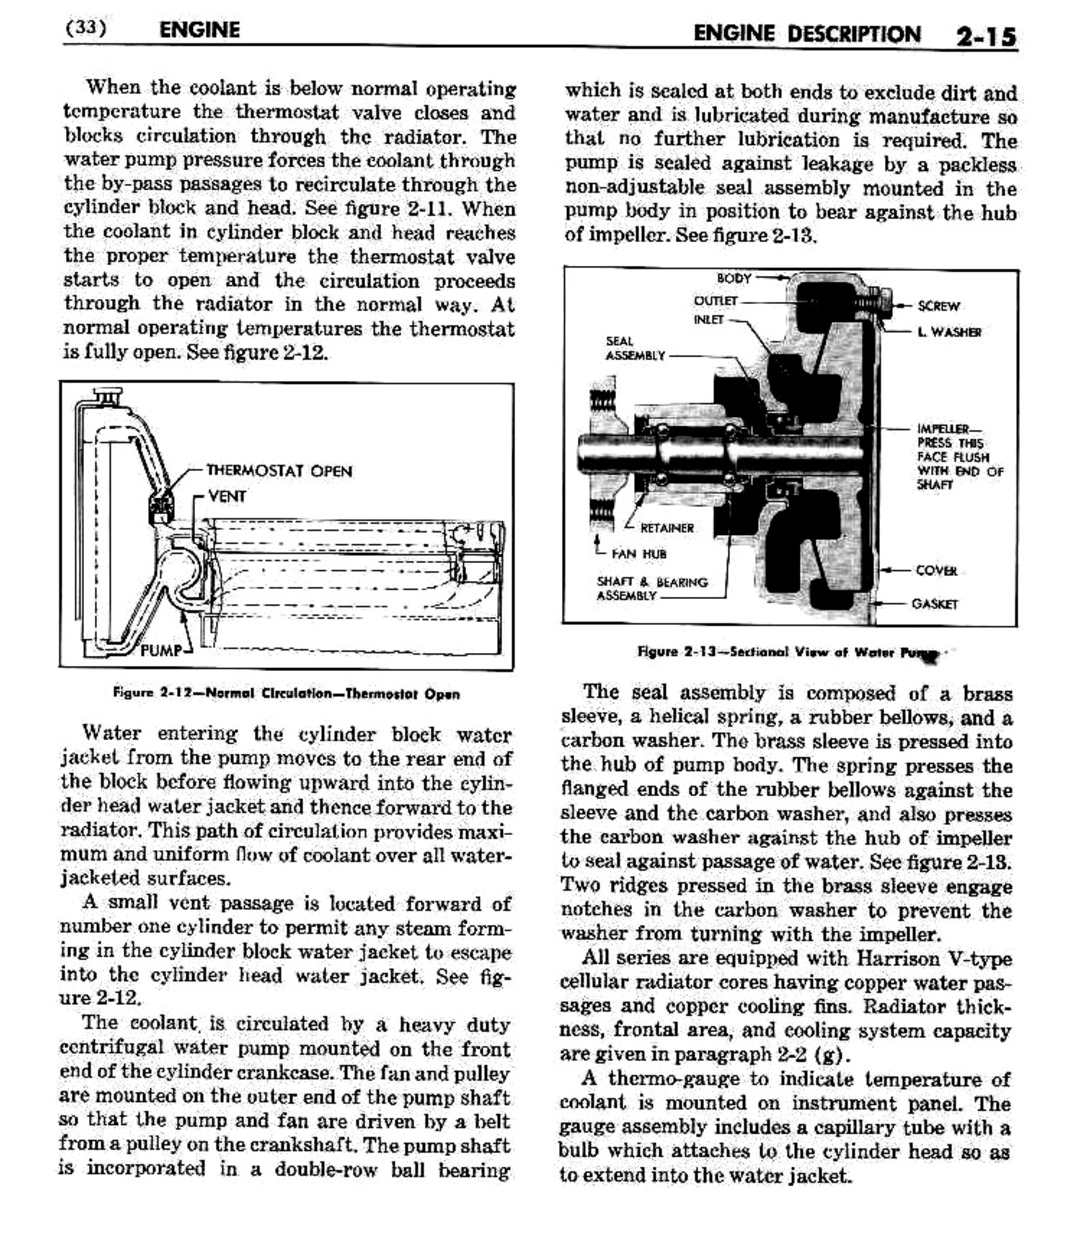 n_03 1951 Buick Shop Manual - Engine-015-015.jpg